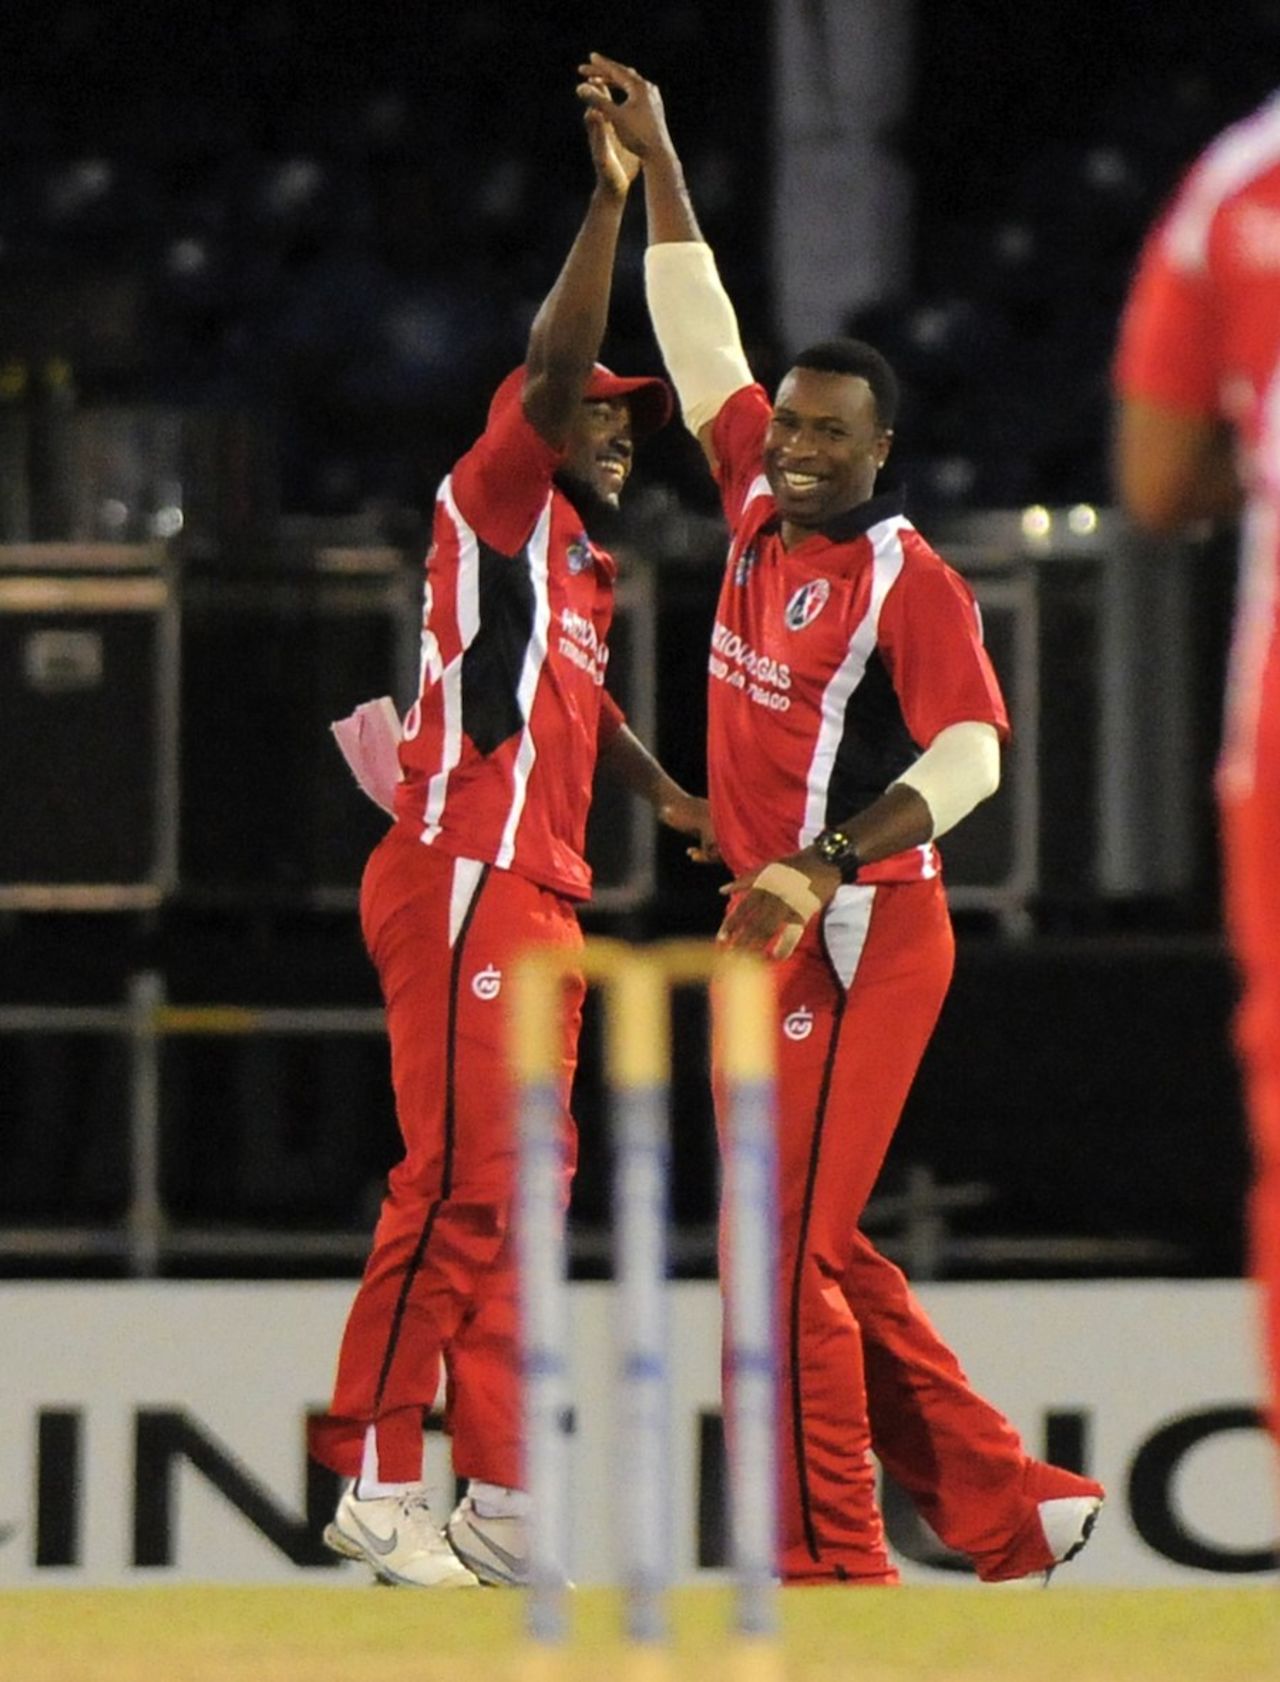 Kieron Pollard and Darren Bravo celebrate a wicket, Trinidad & Tobago v Leeward Islands, Caribbean T20, Trinidad, January 9, 2013